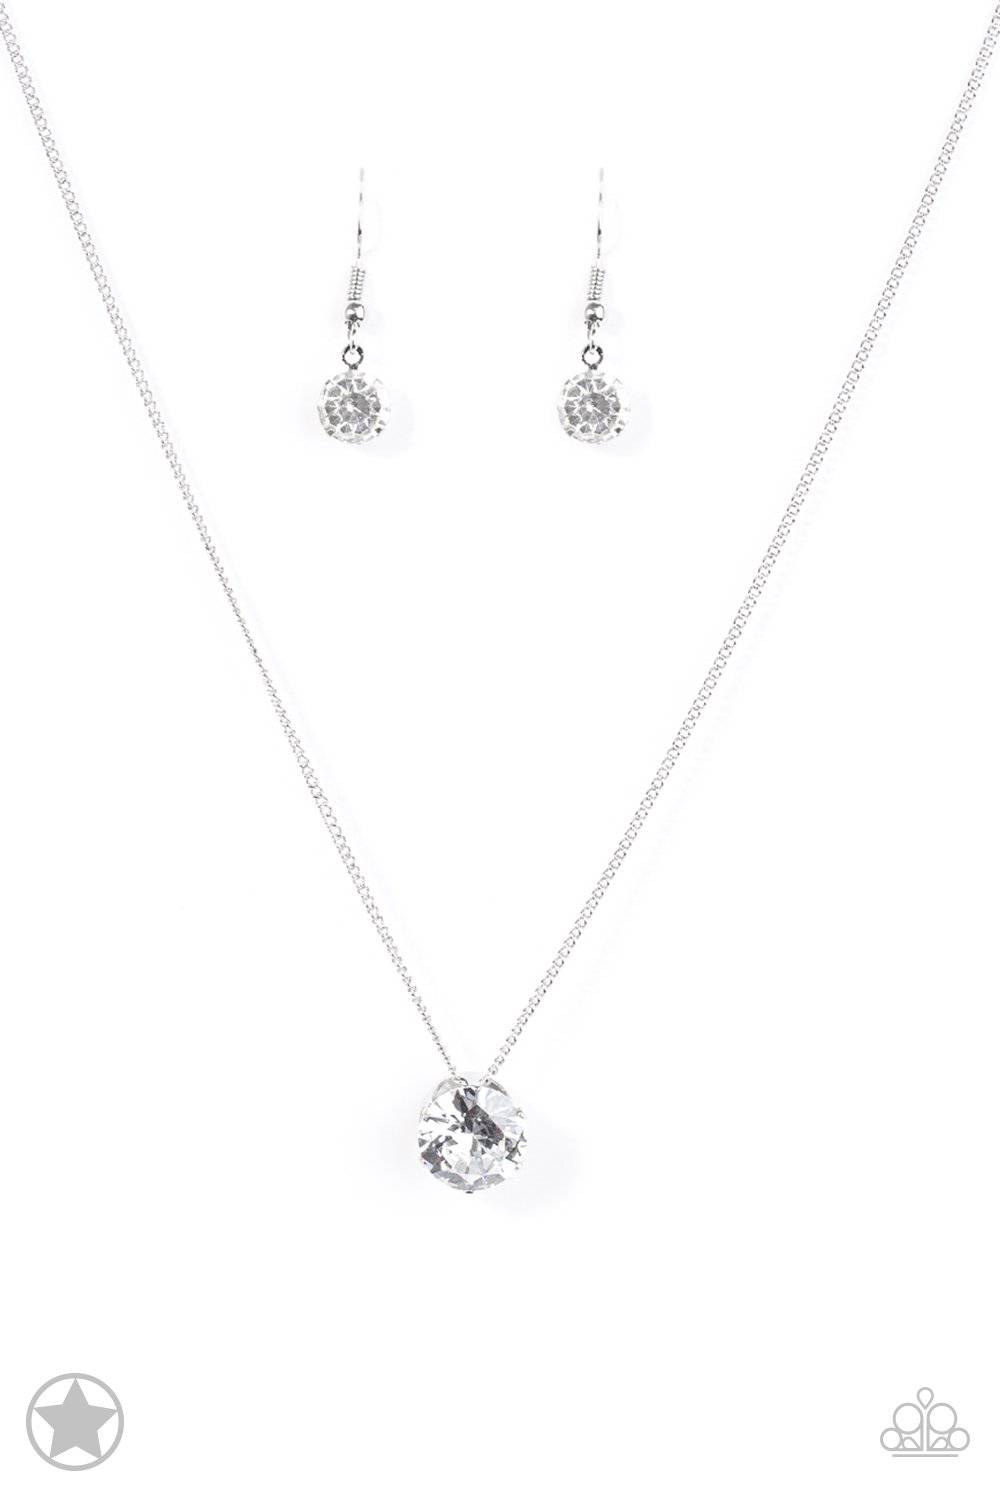 What A Gem - White Rhinestone Blockbuster Necklace - Paparazzi Accessories - GlaMarous Titi Jewels